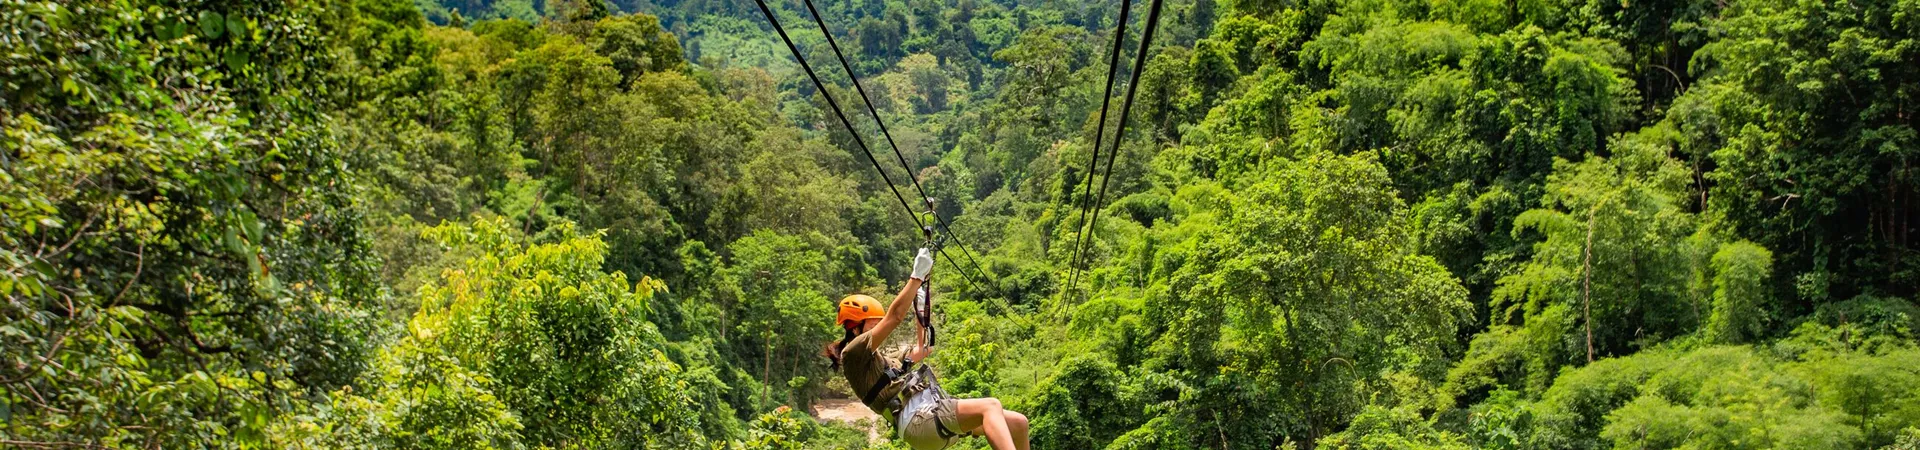 Woman on a Zipline Adventure through the jungle in Chiang Mai, Thailand